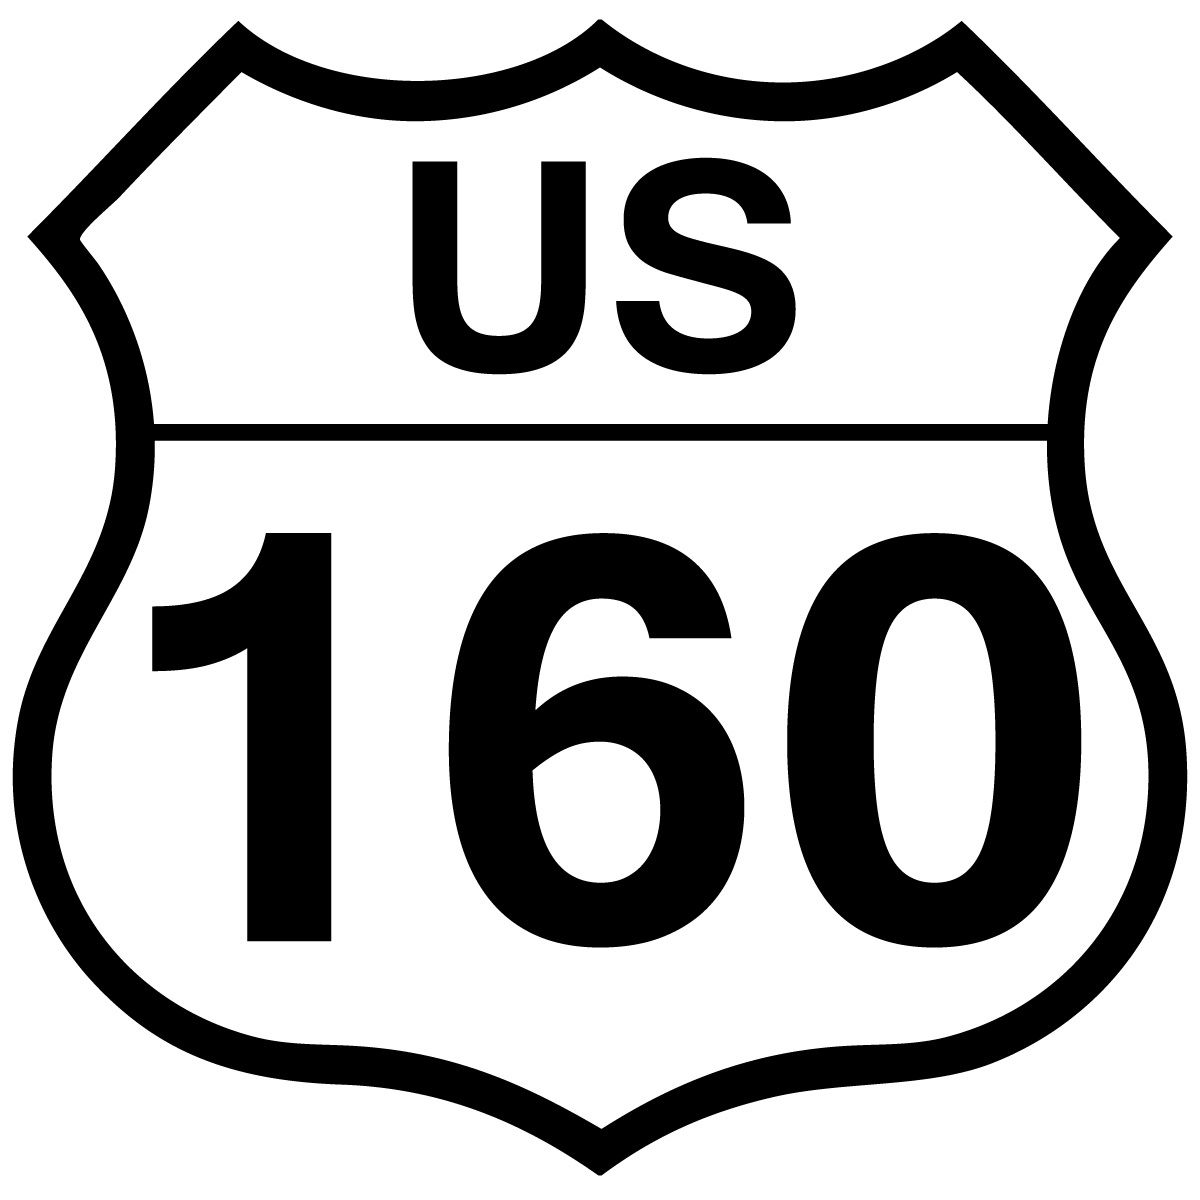 Colorado State Road 145